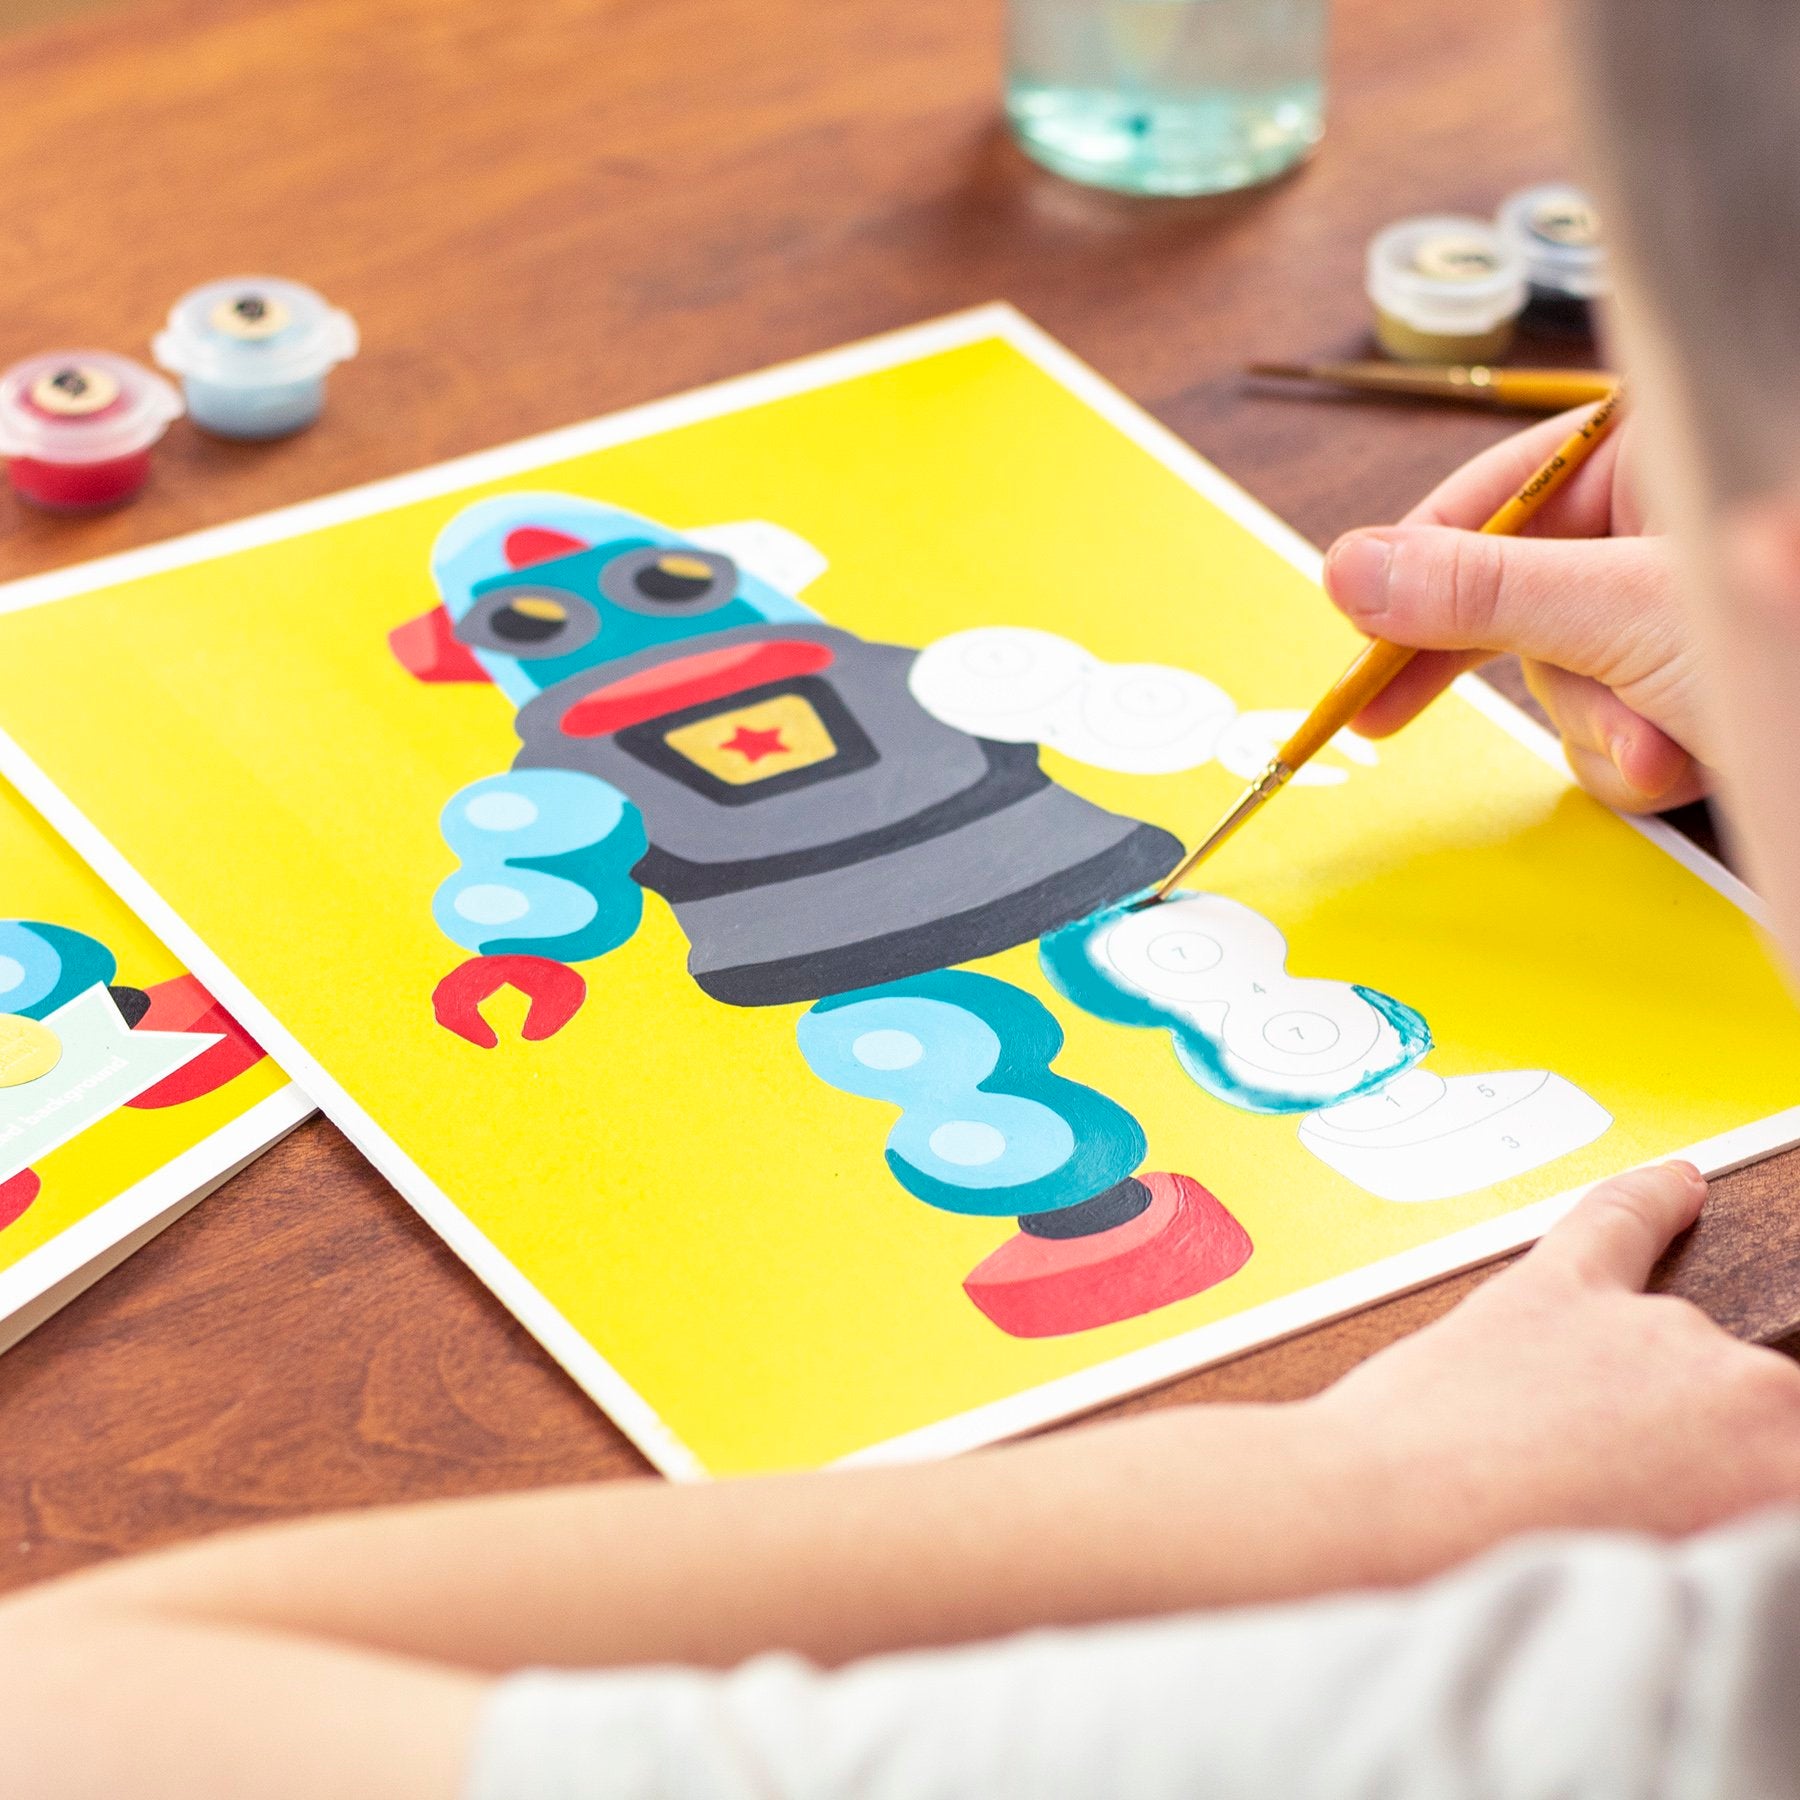 KIDS Bubble Bot Paint-by Number Kit – JadaBug's Kids Boutique